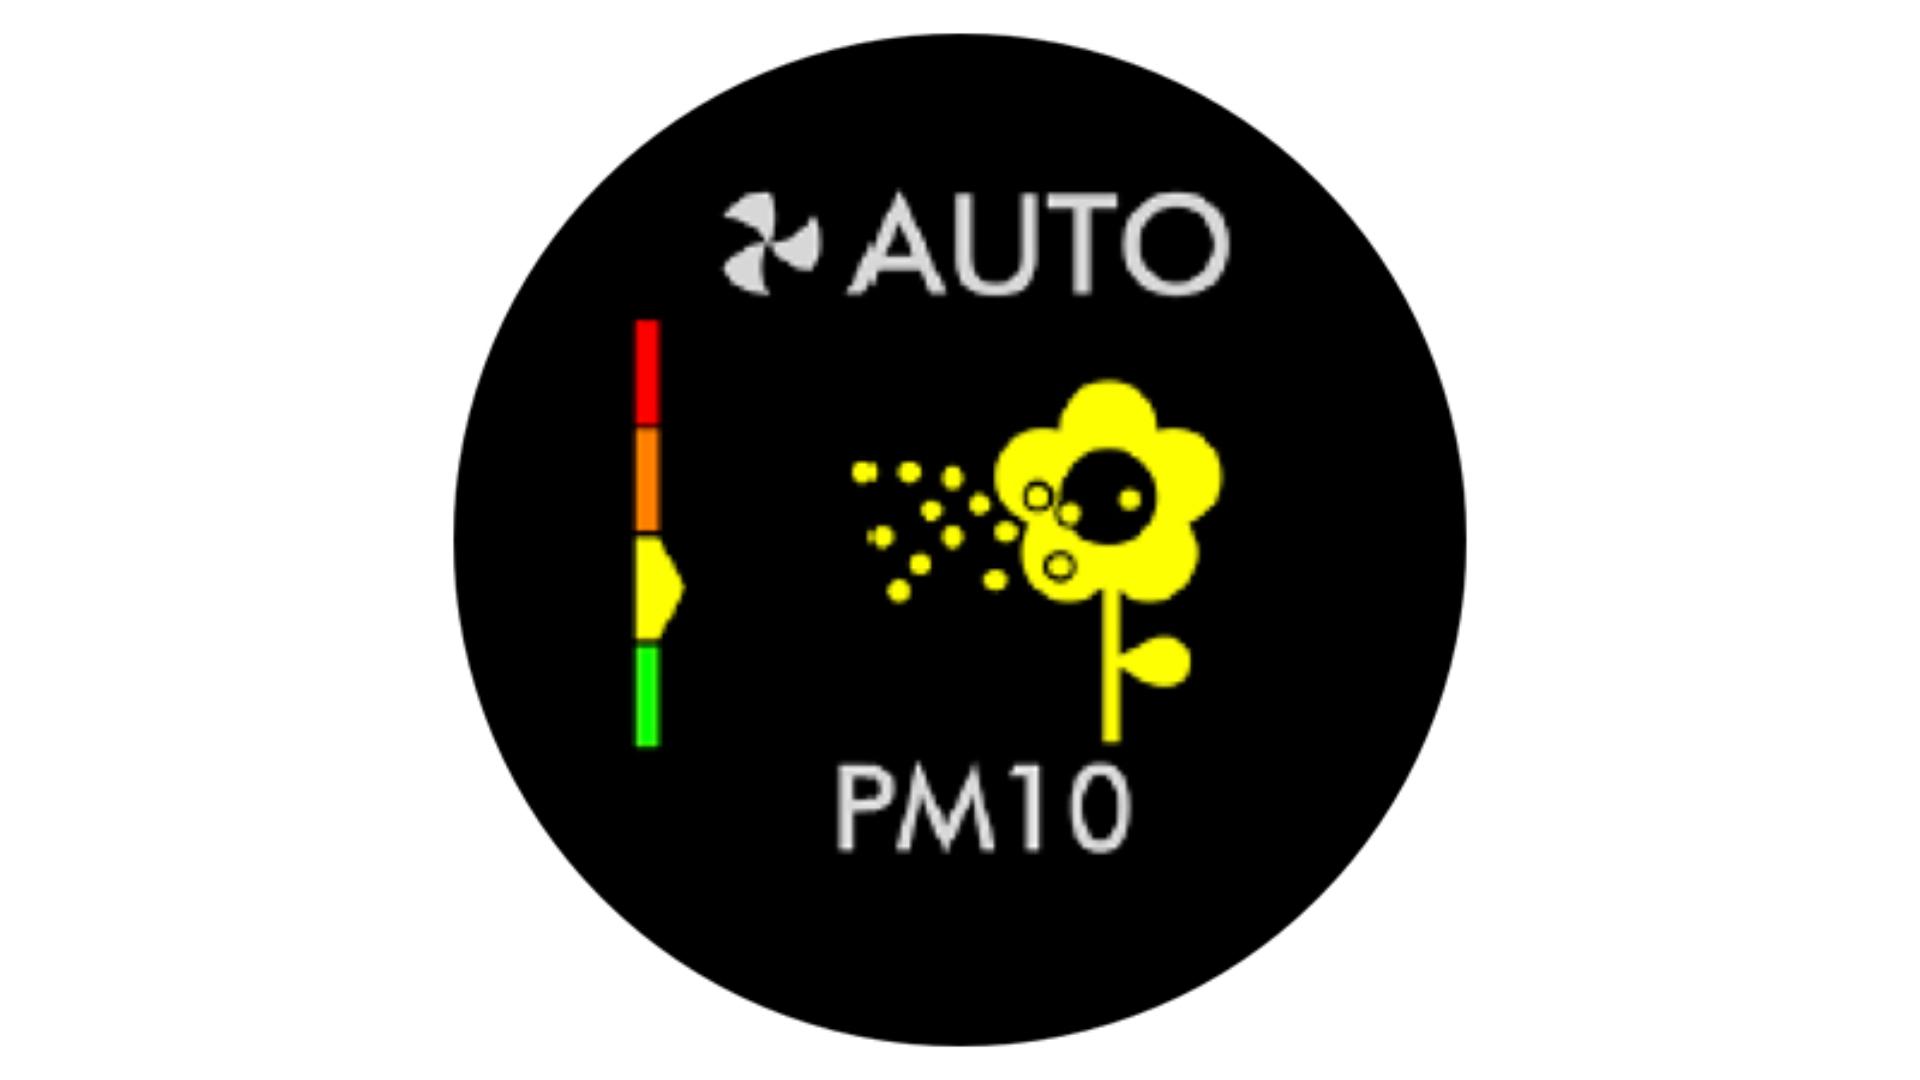 Ekran LCD poziomu PM10